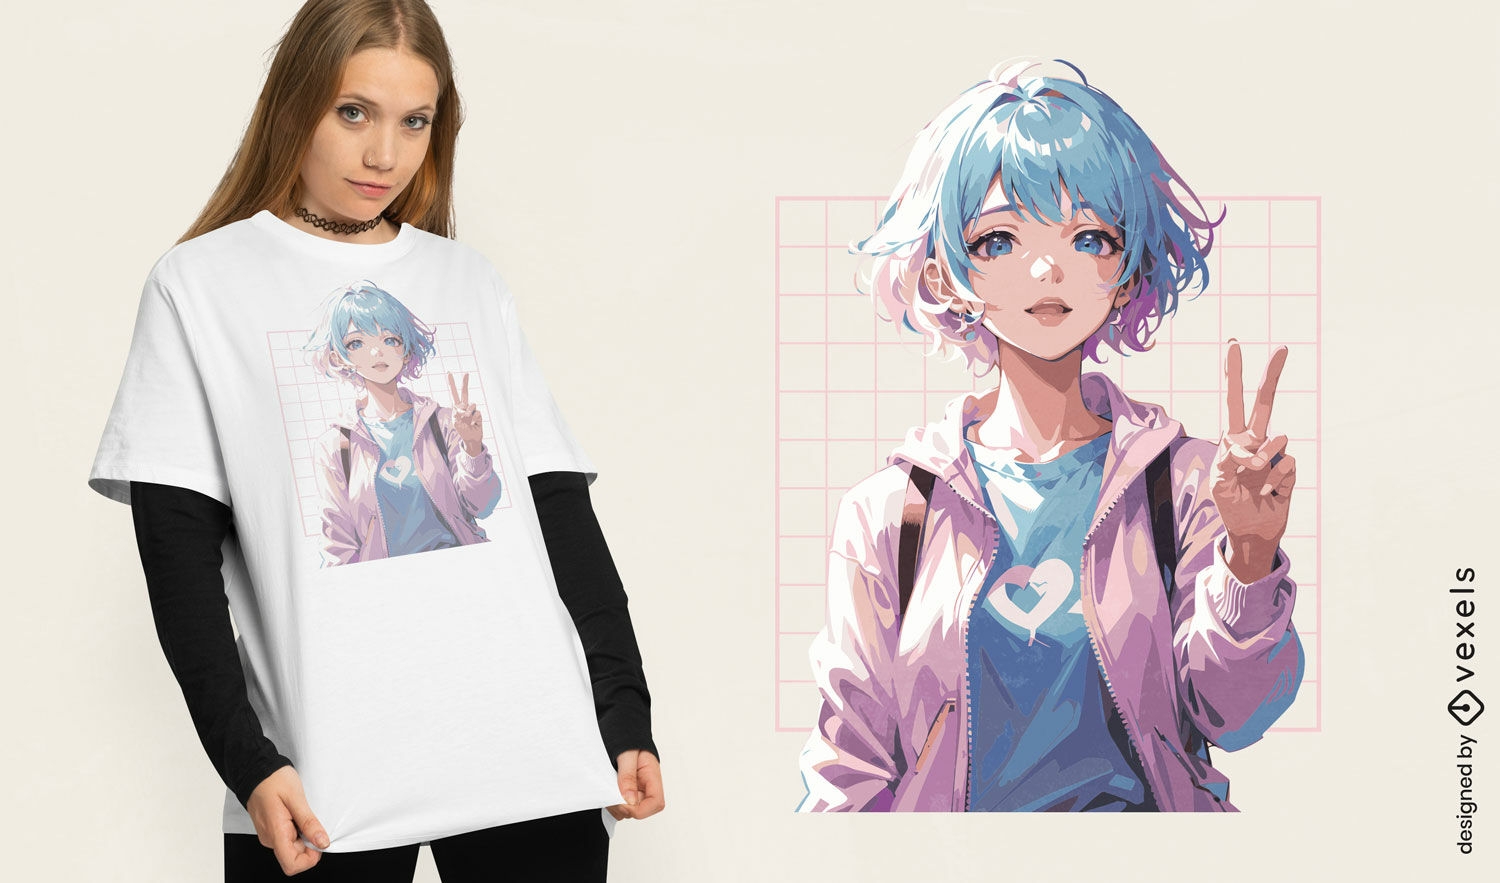  Anime girl peace sign t-shirt design